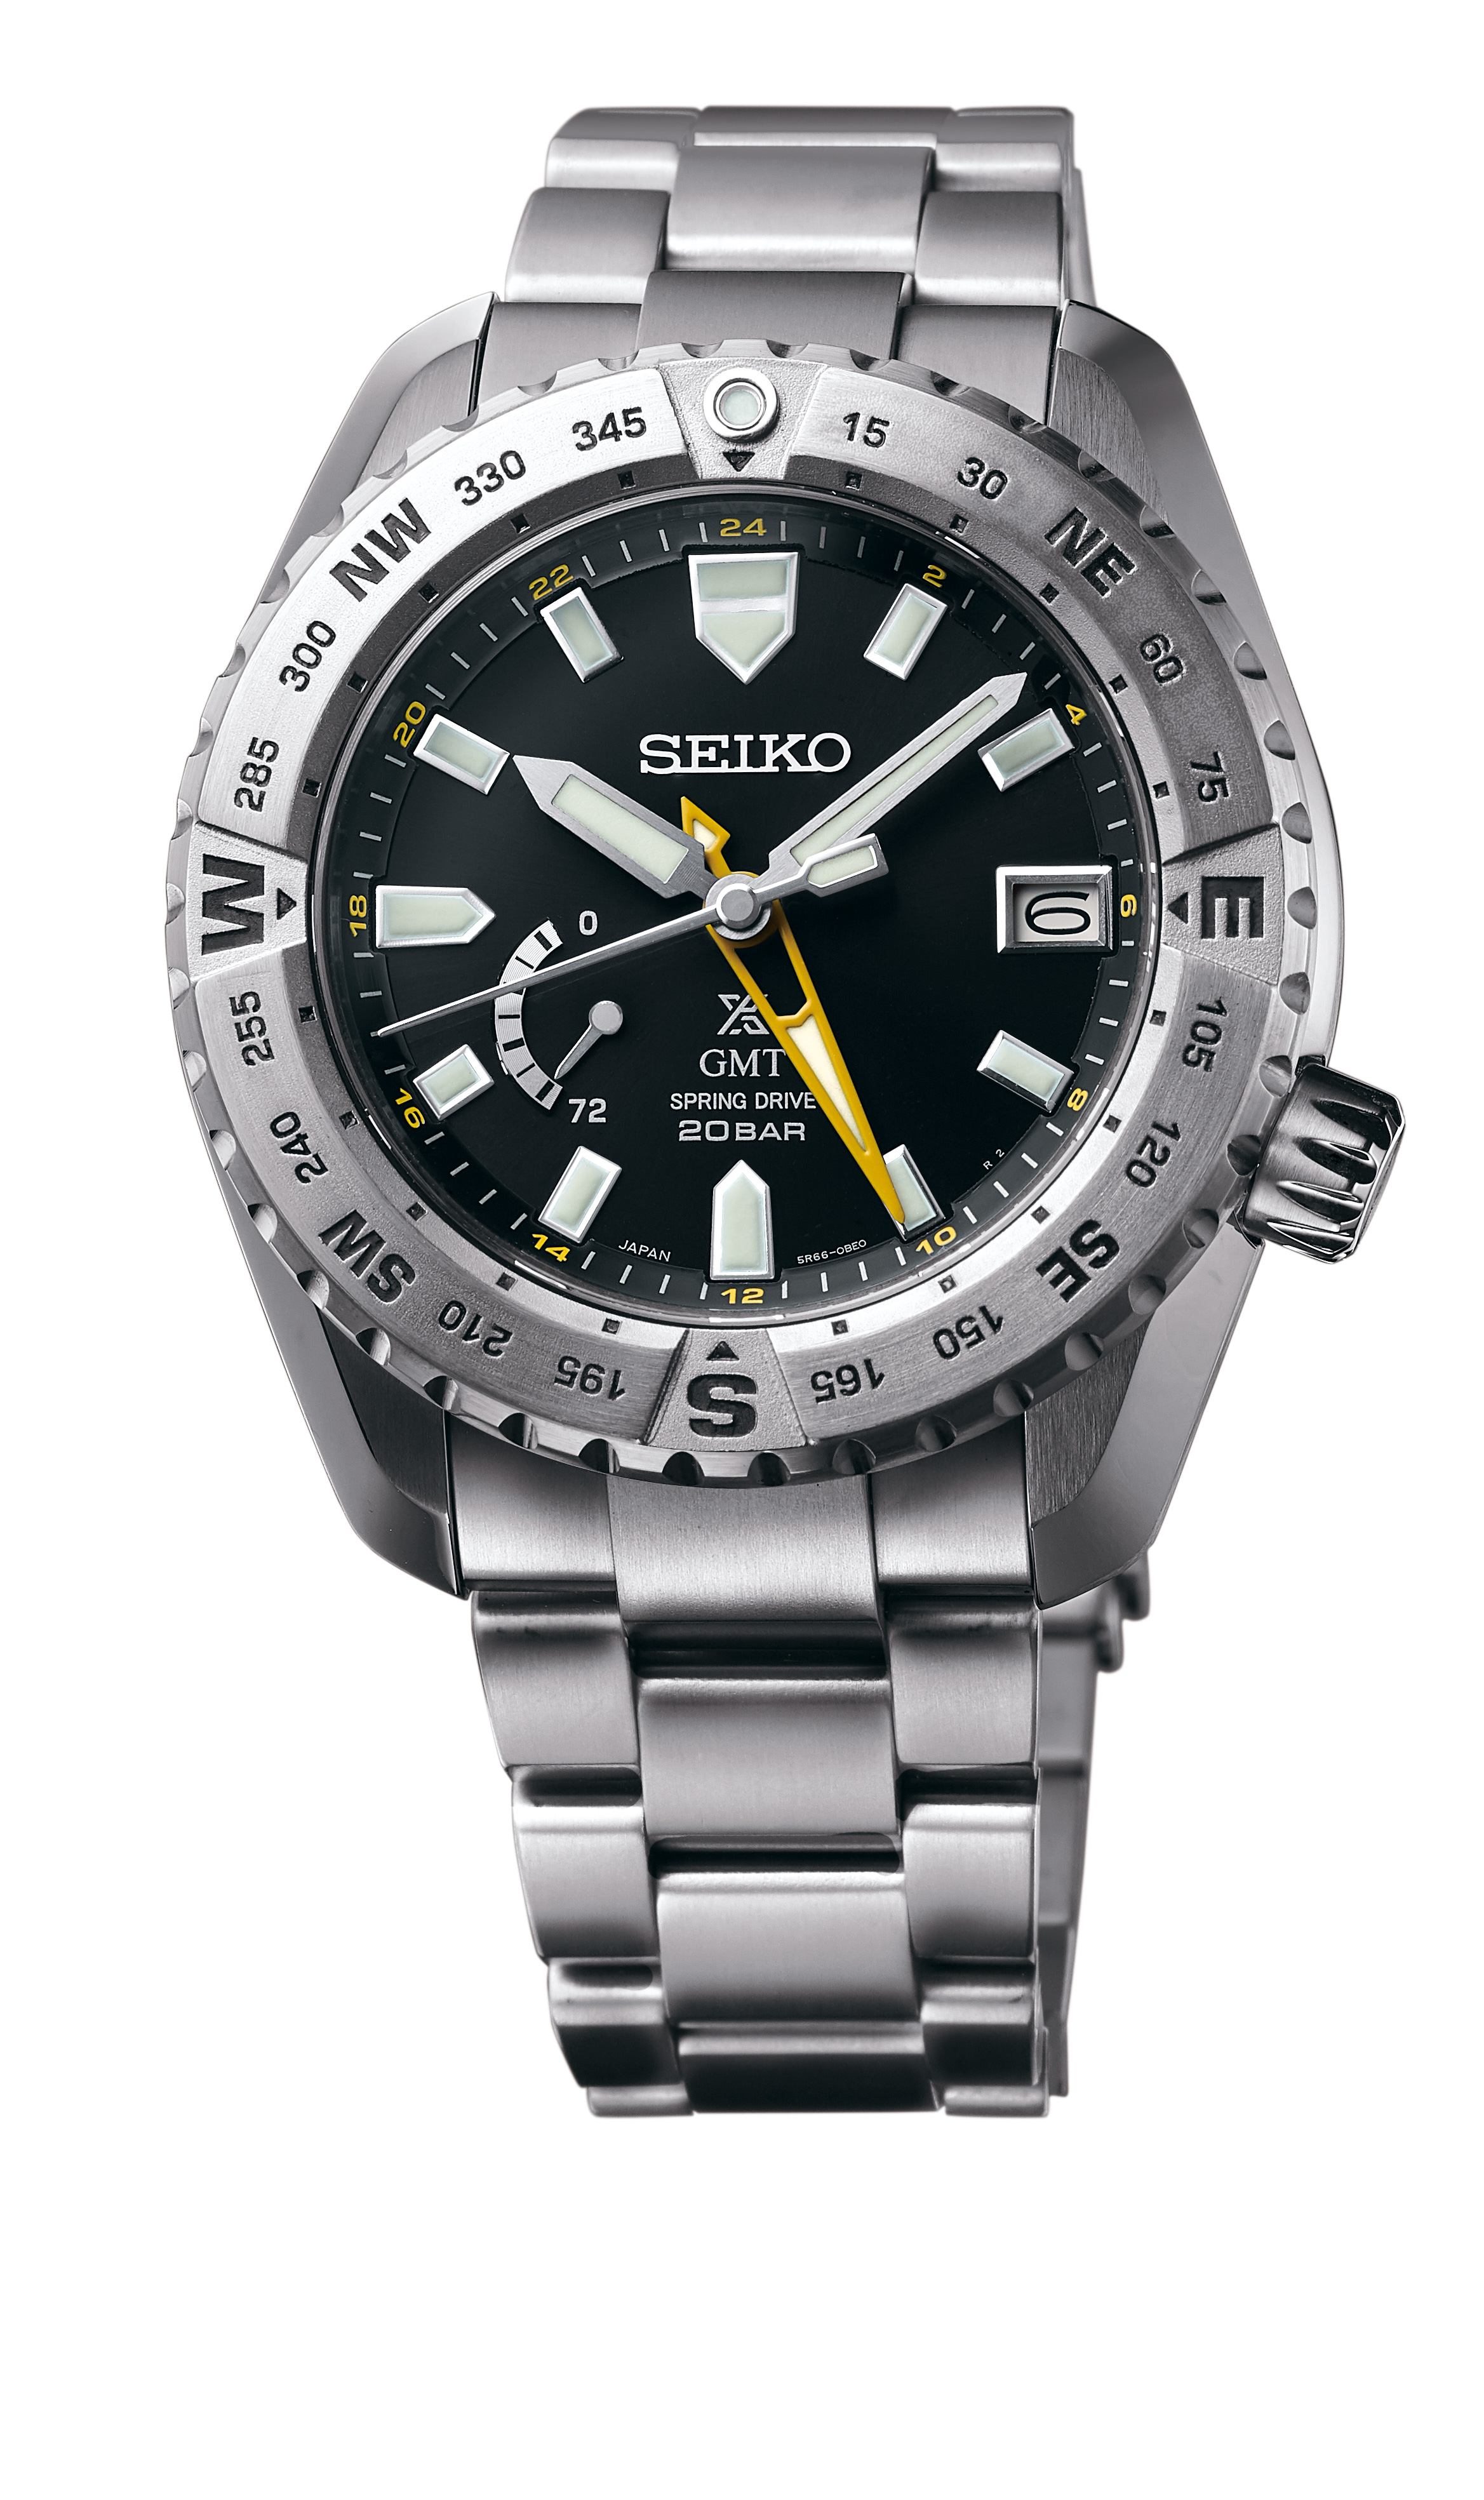 Die Armbanduhr von Seiko Prospex LX